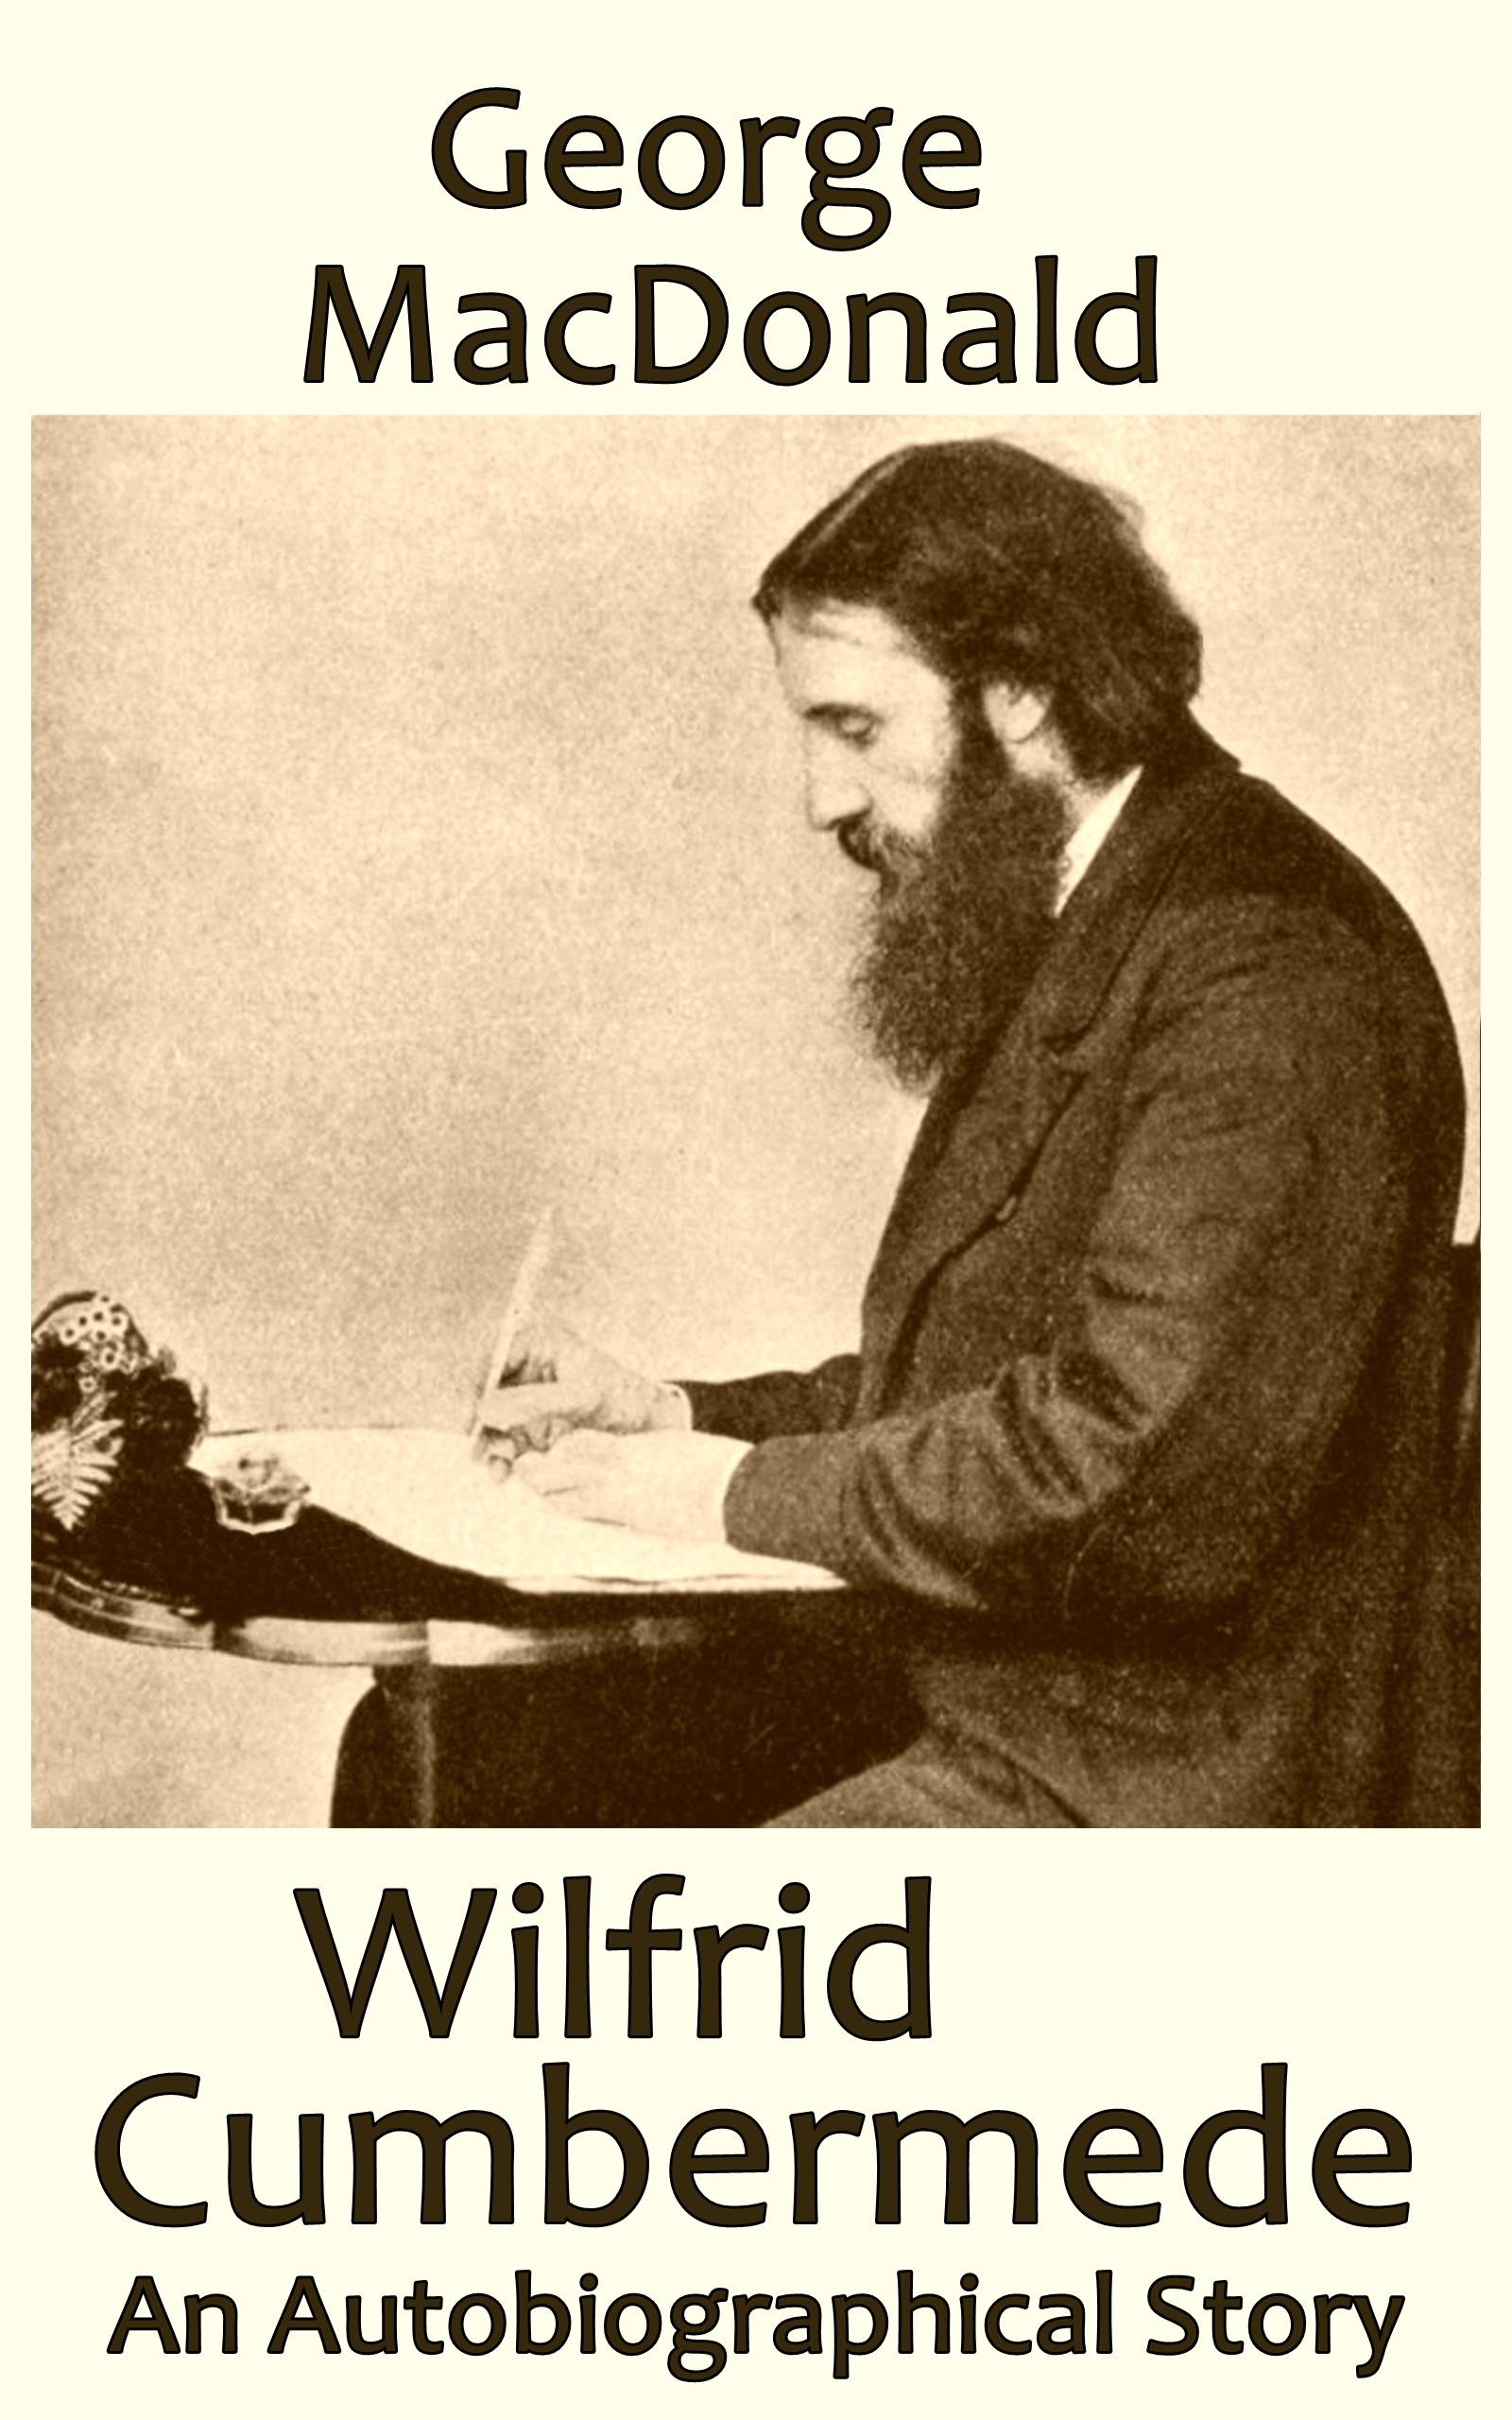 Book cover for Wilfrid Cumbermede, by George MacDonald